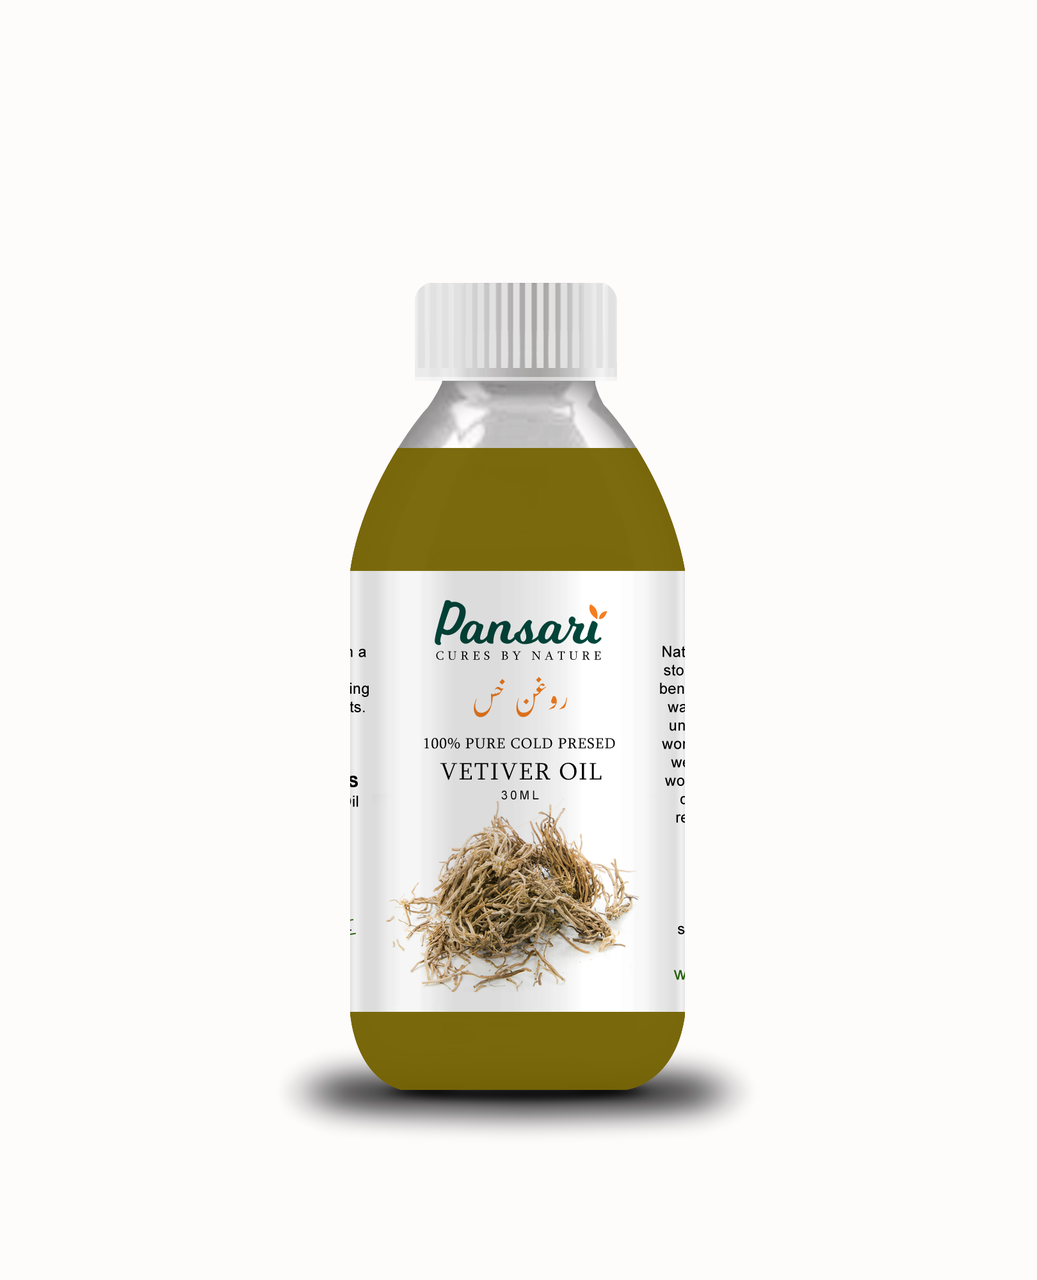 Pansari's 100% Pure Vetiver Oil